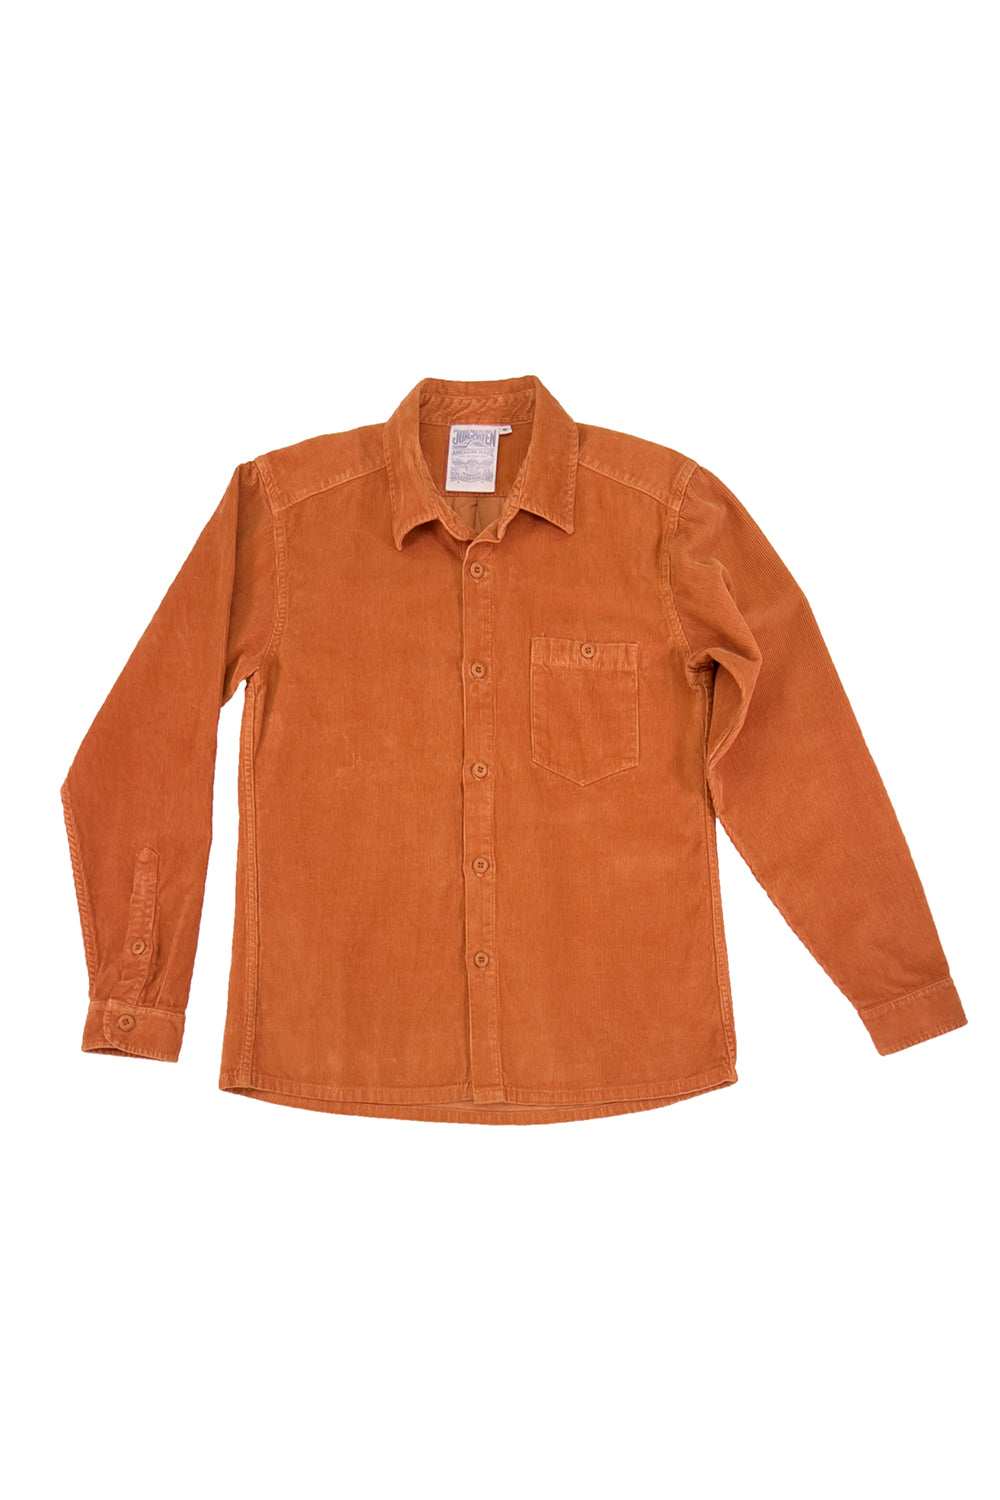 Ventura Shirt | Jungmaven Hemp Clothing & Accessories / Color: Terracotta